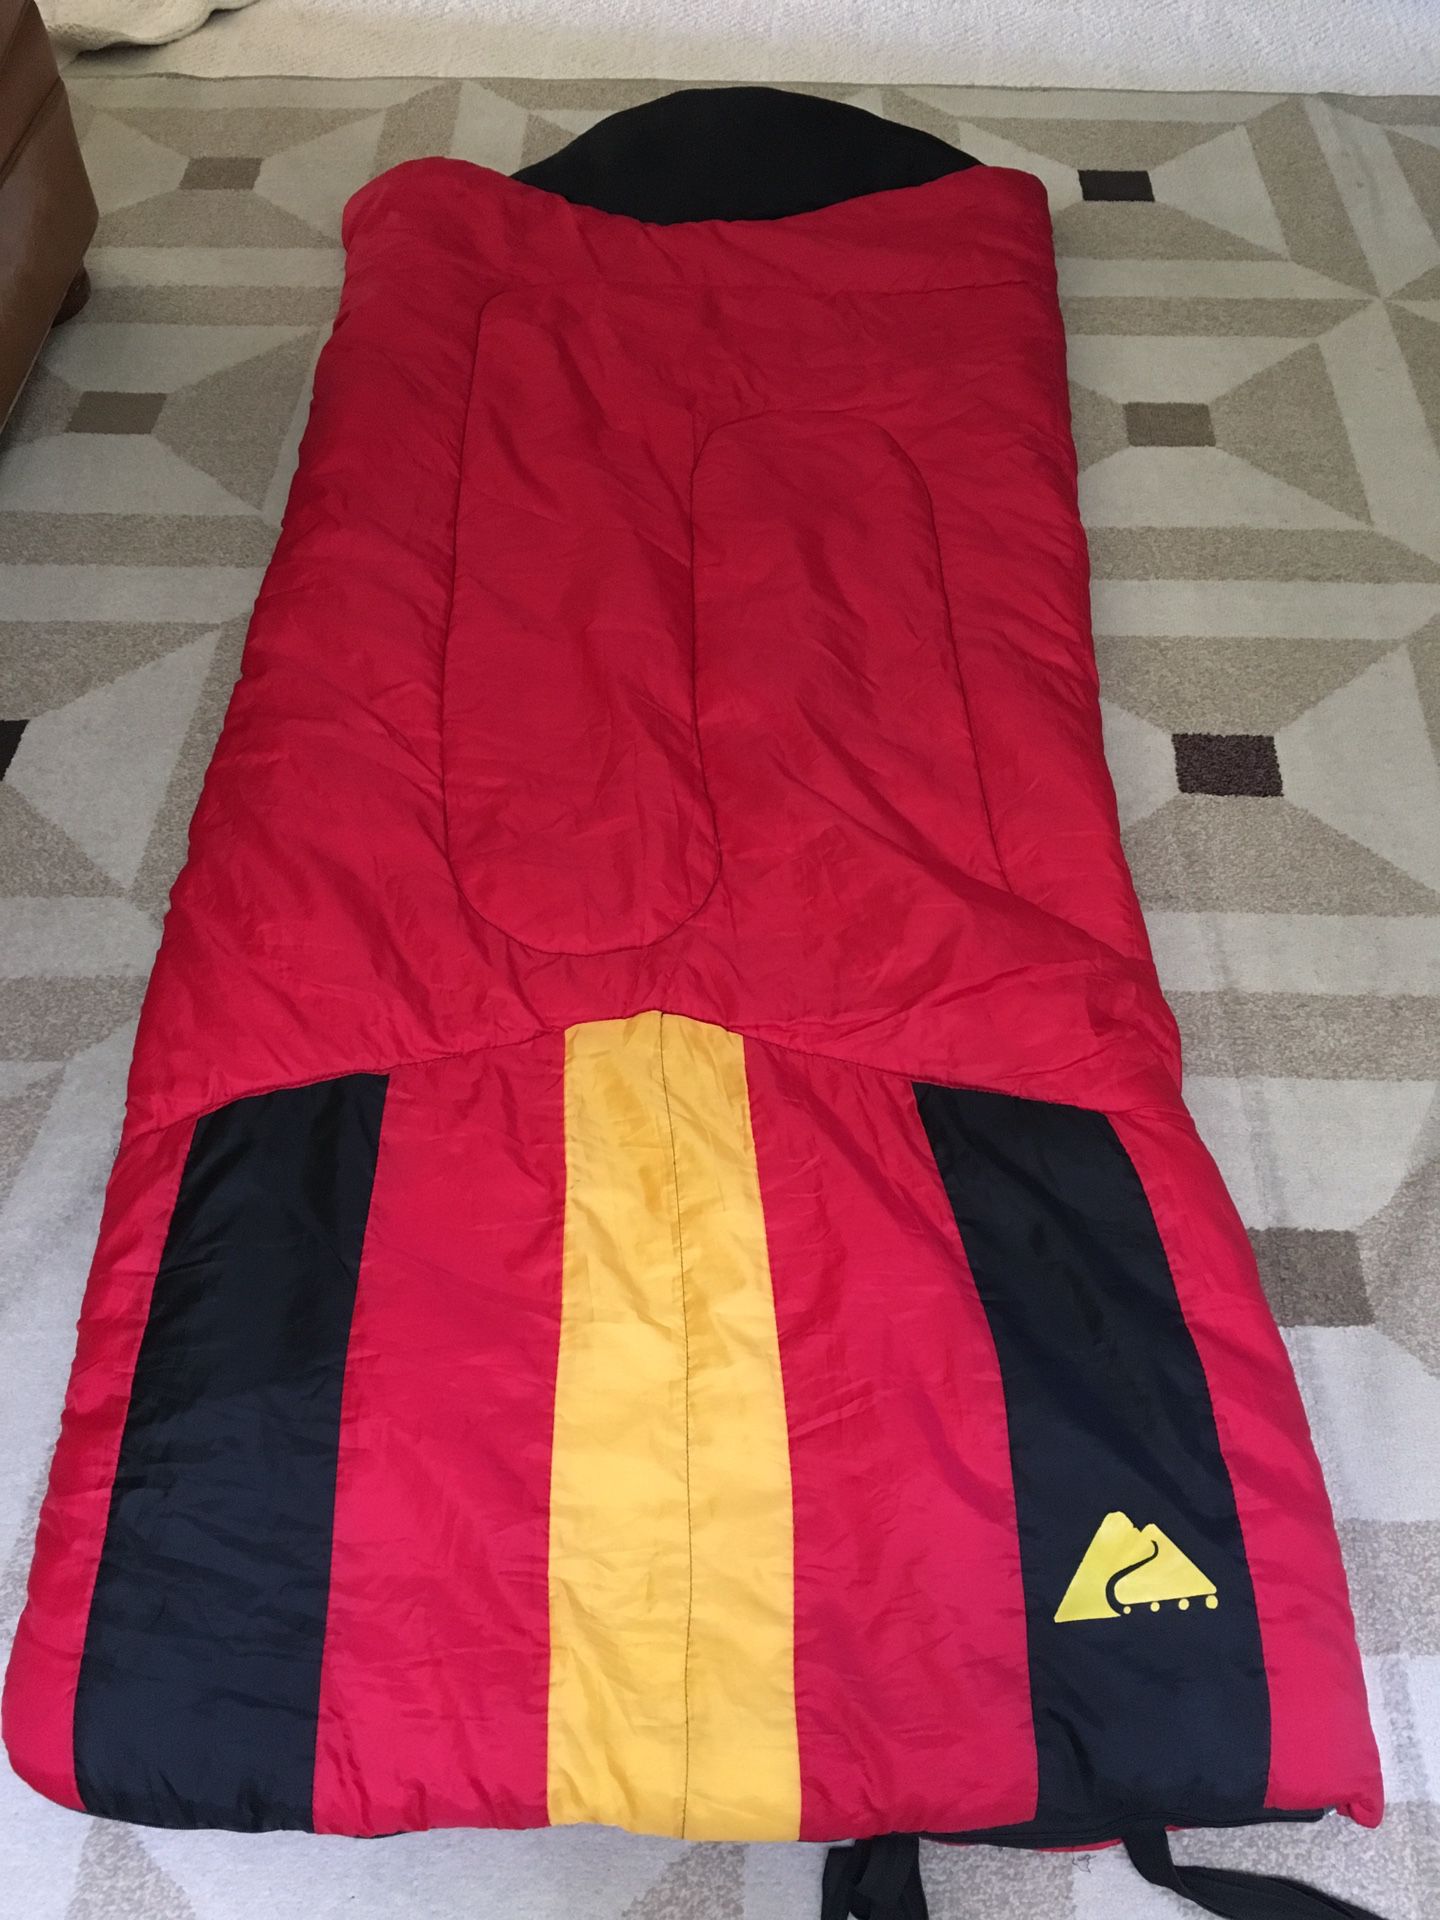 Full size sleeping bag- nylon $20